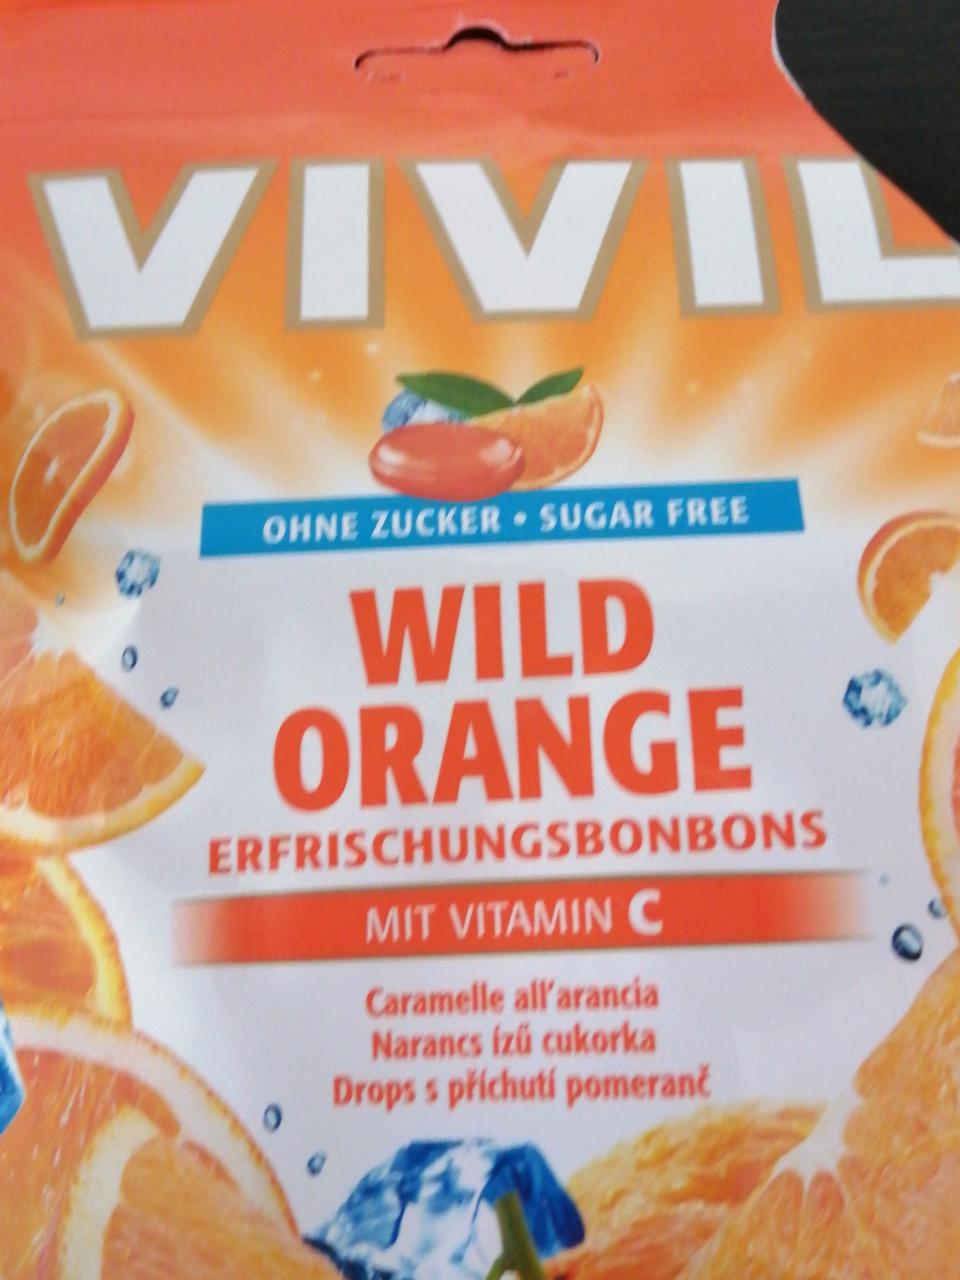 Fotografie - Vivil wild orange mit vitamin C, sugar free